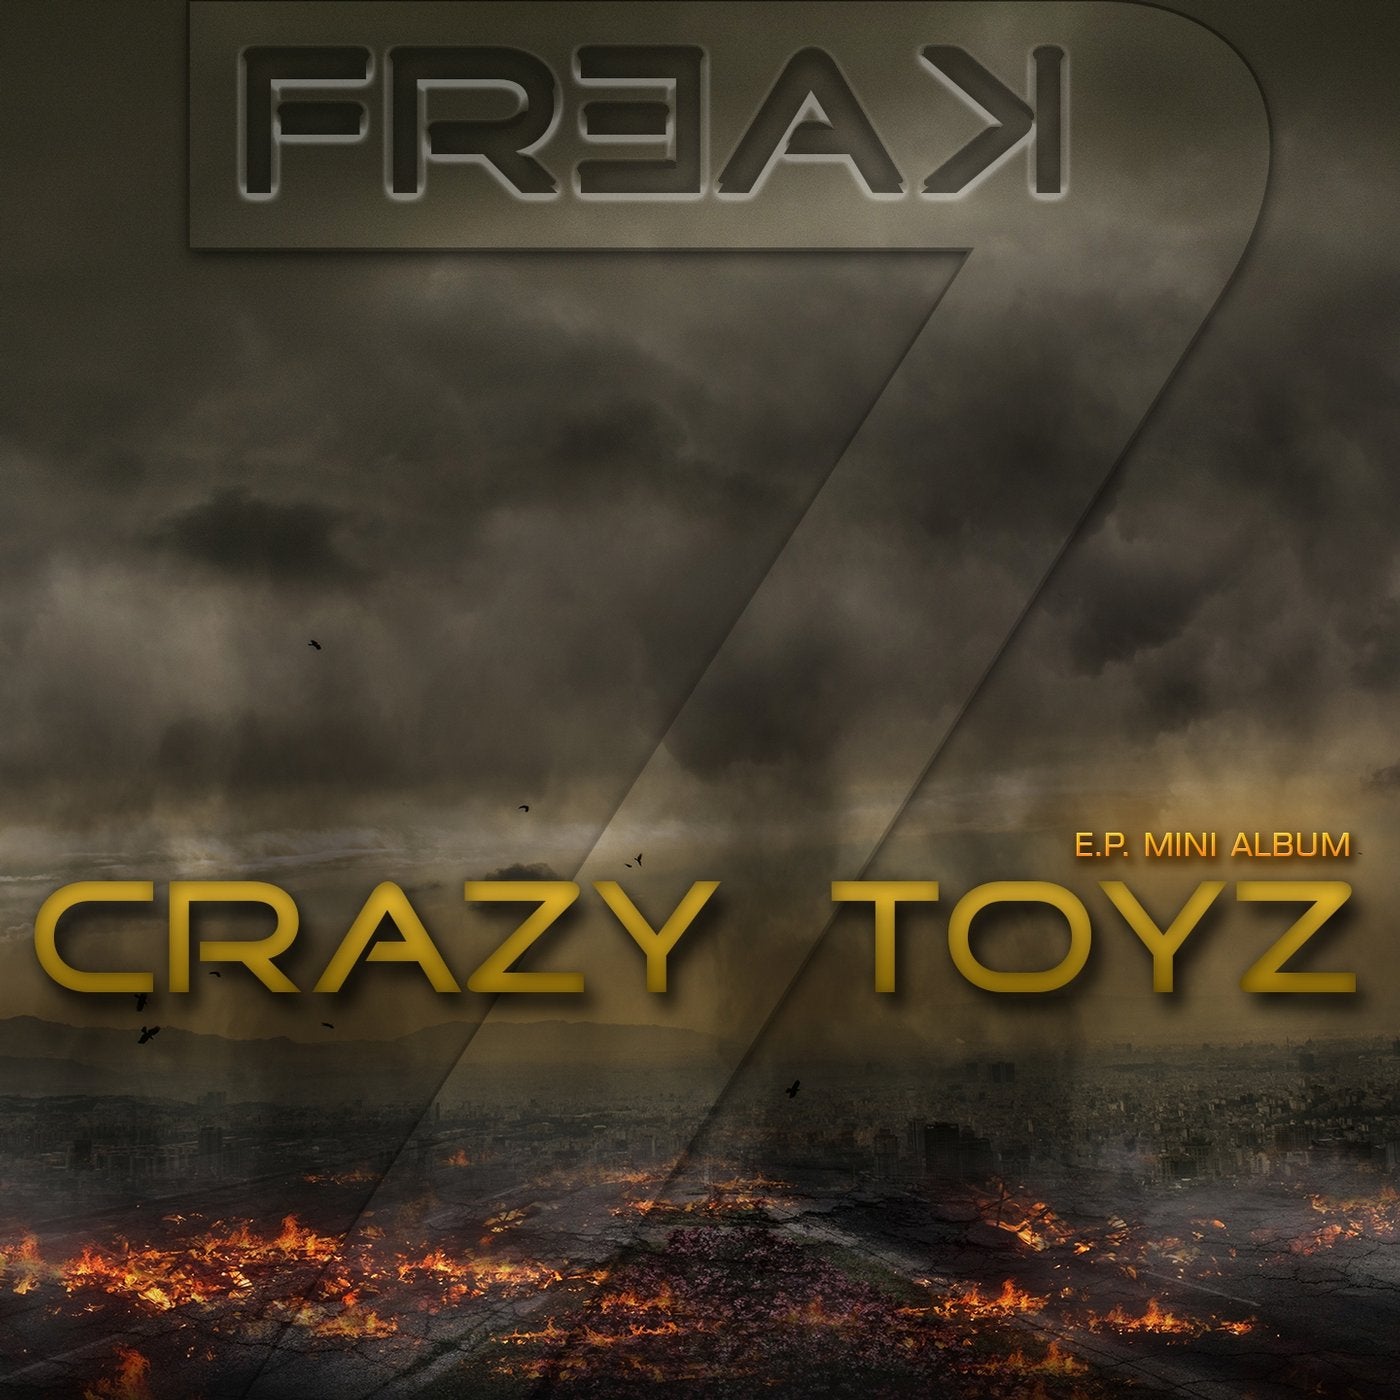 Crazy Toyz